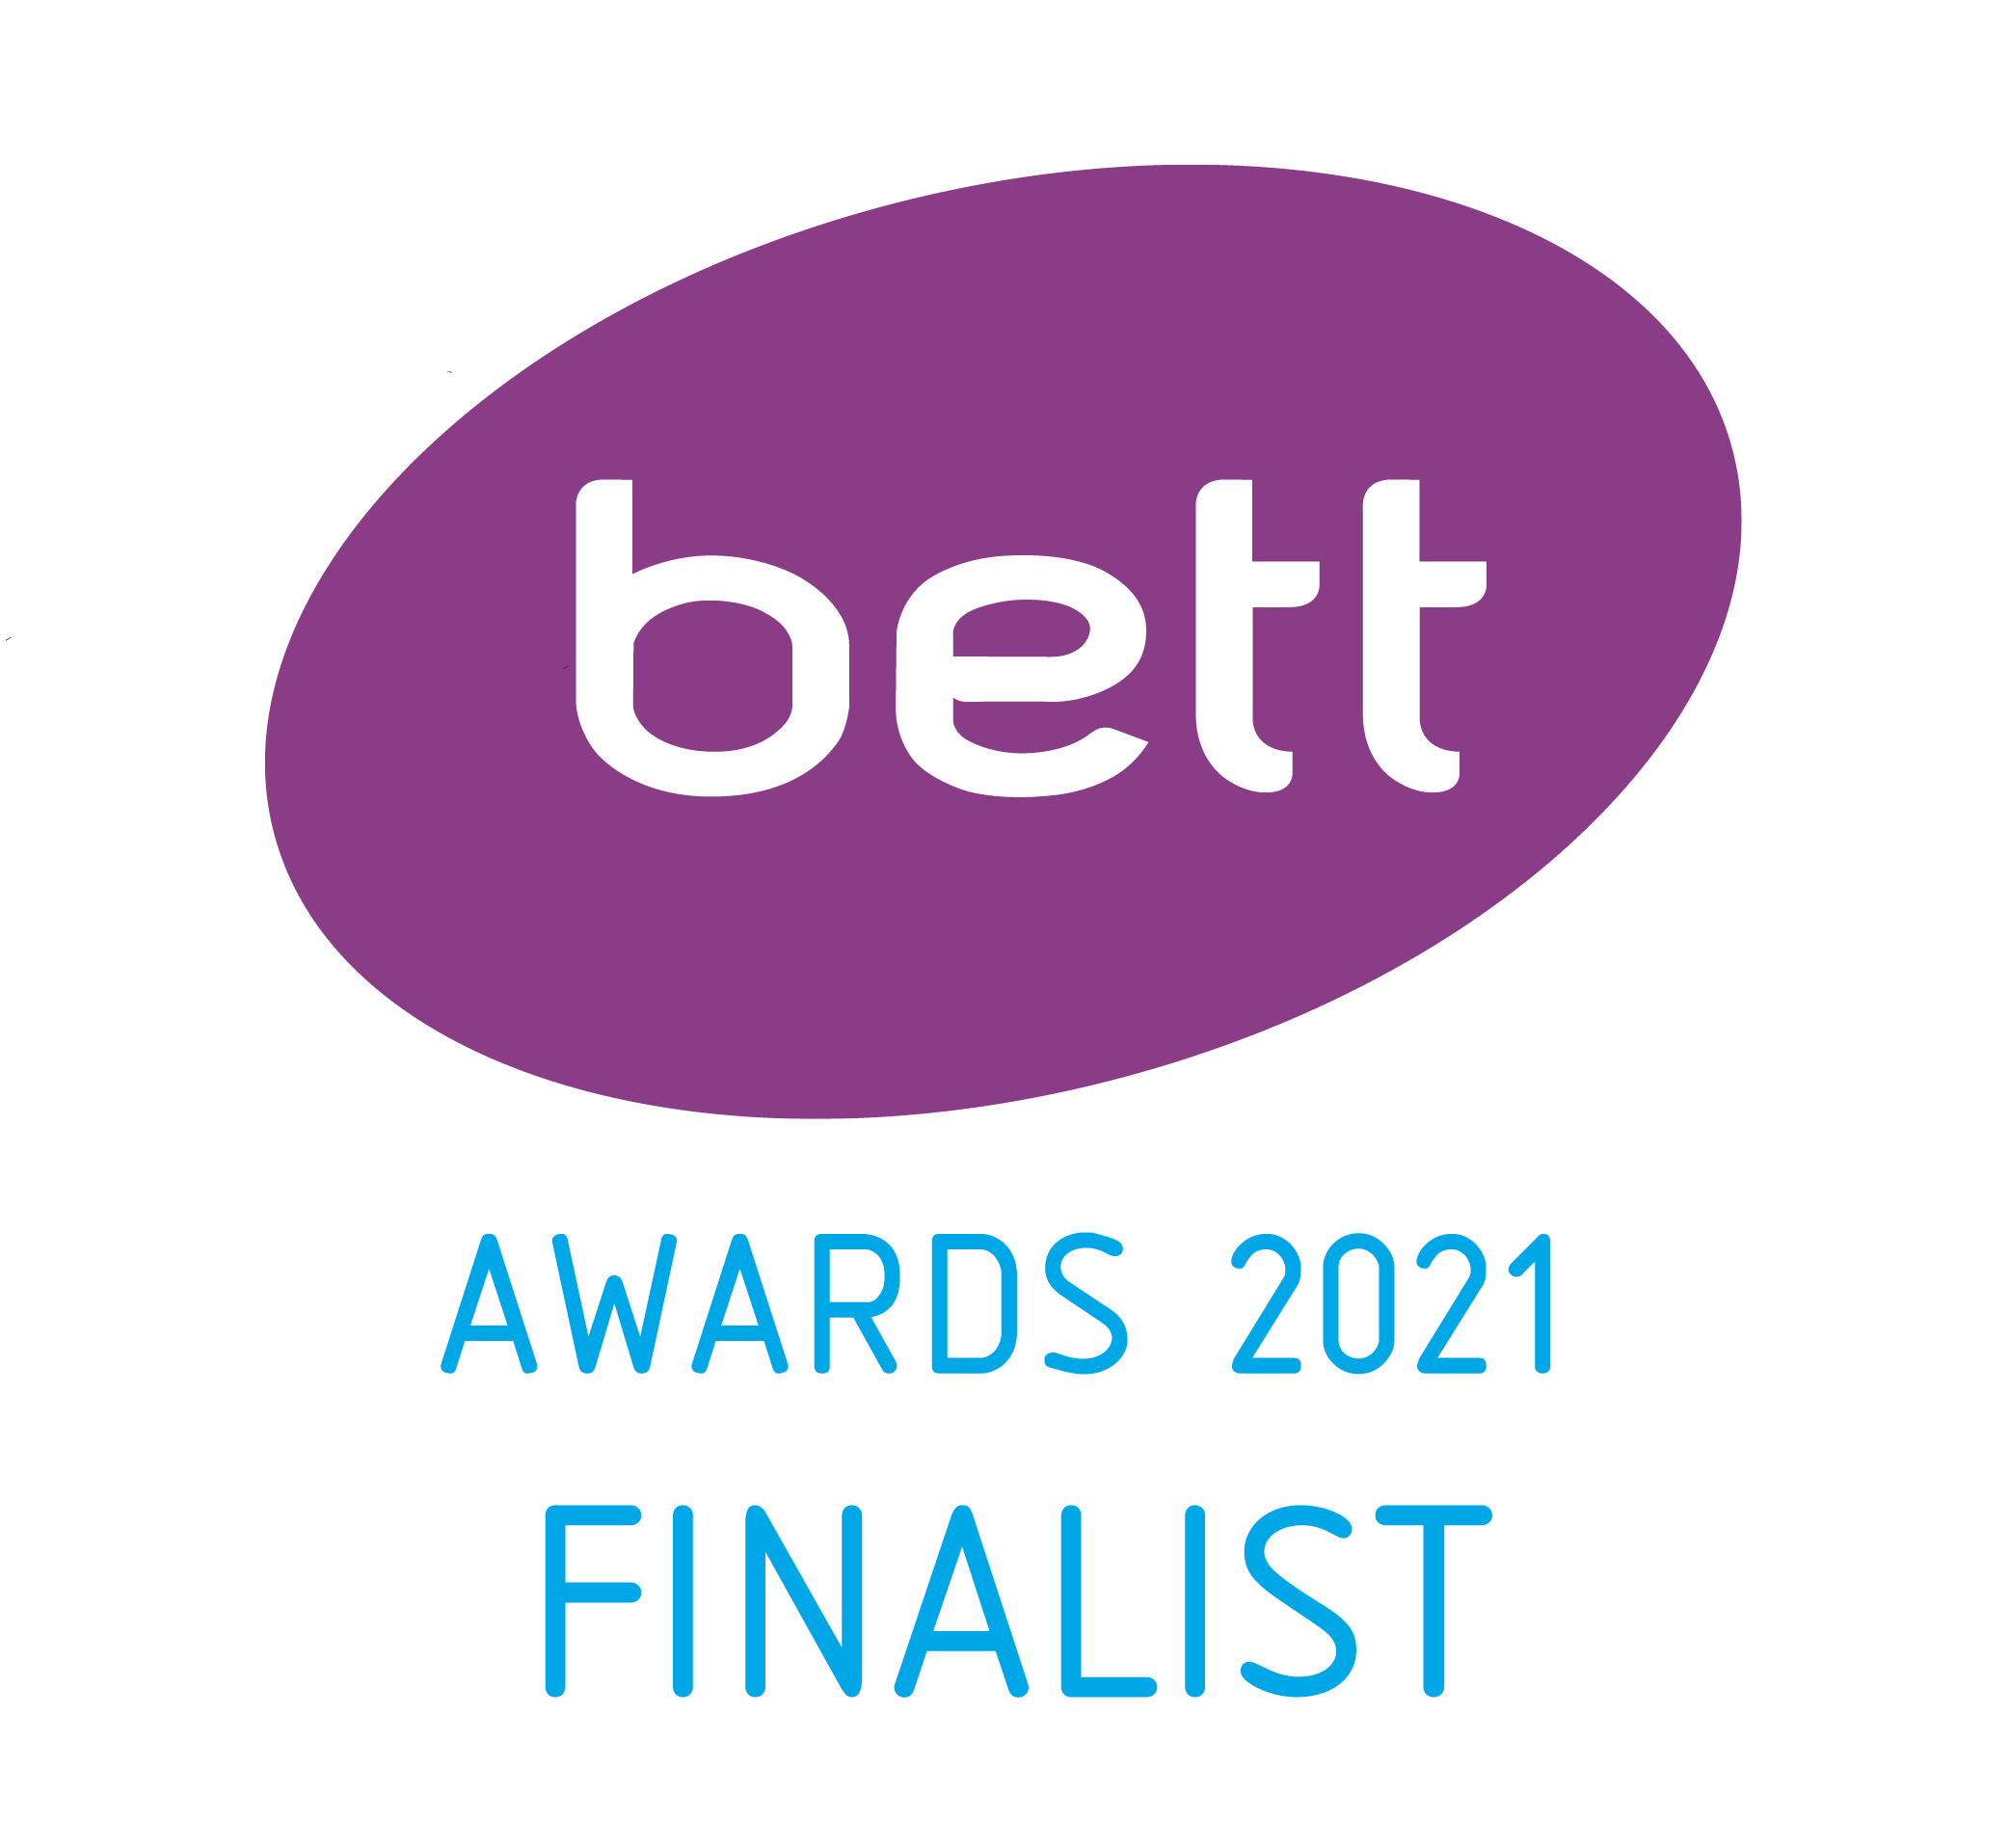 Bett Awards Finalist 